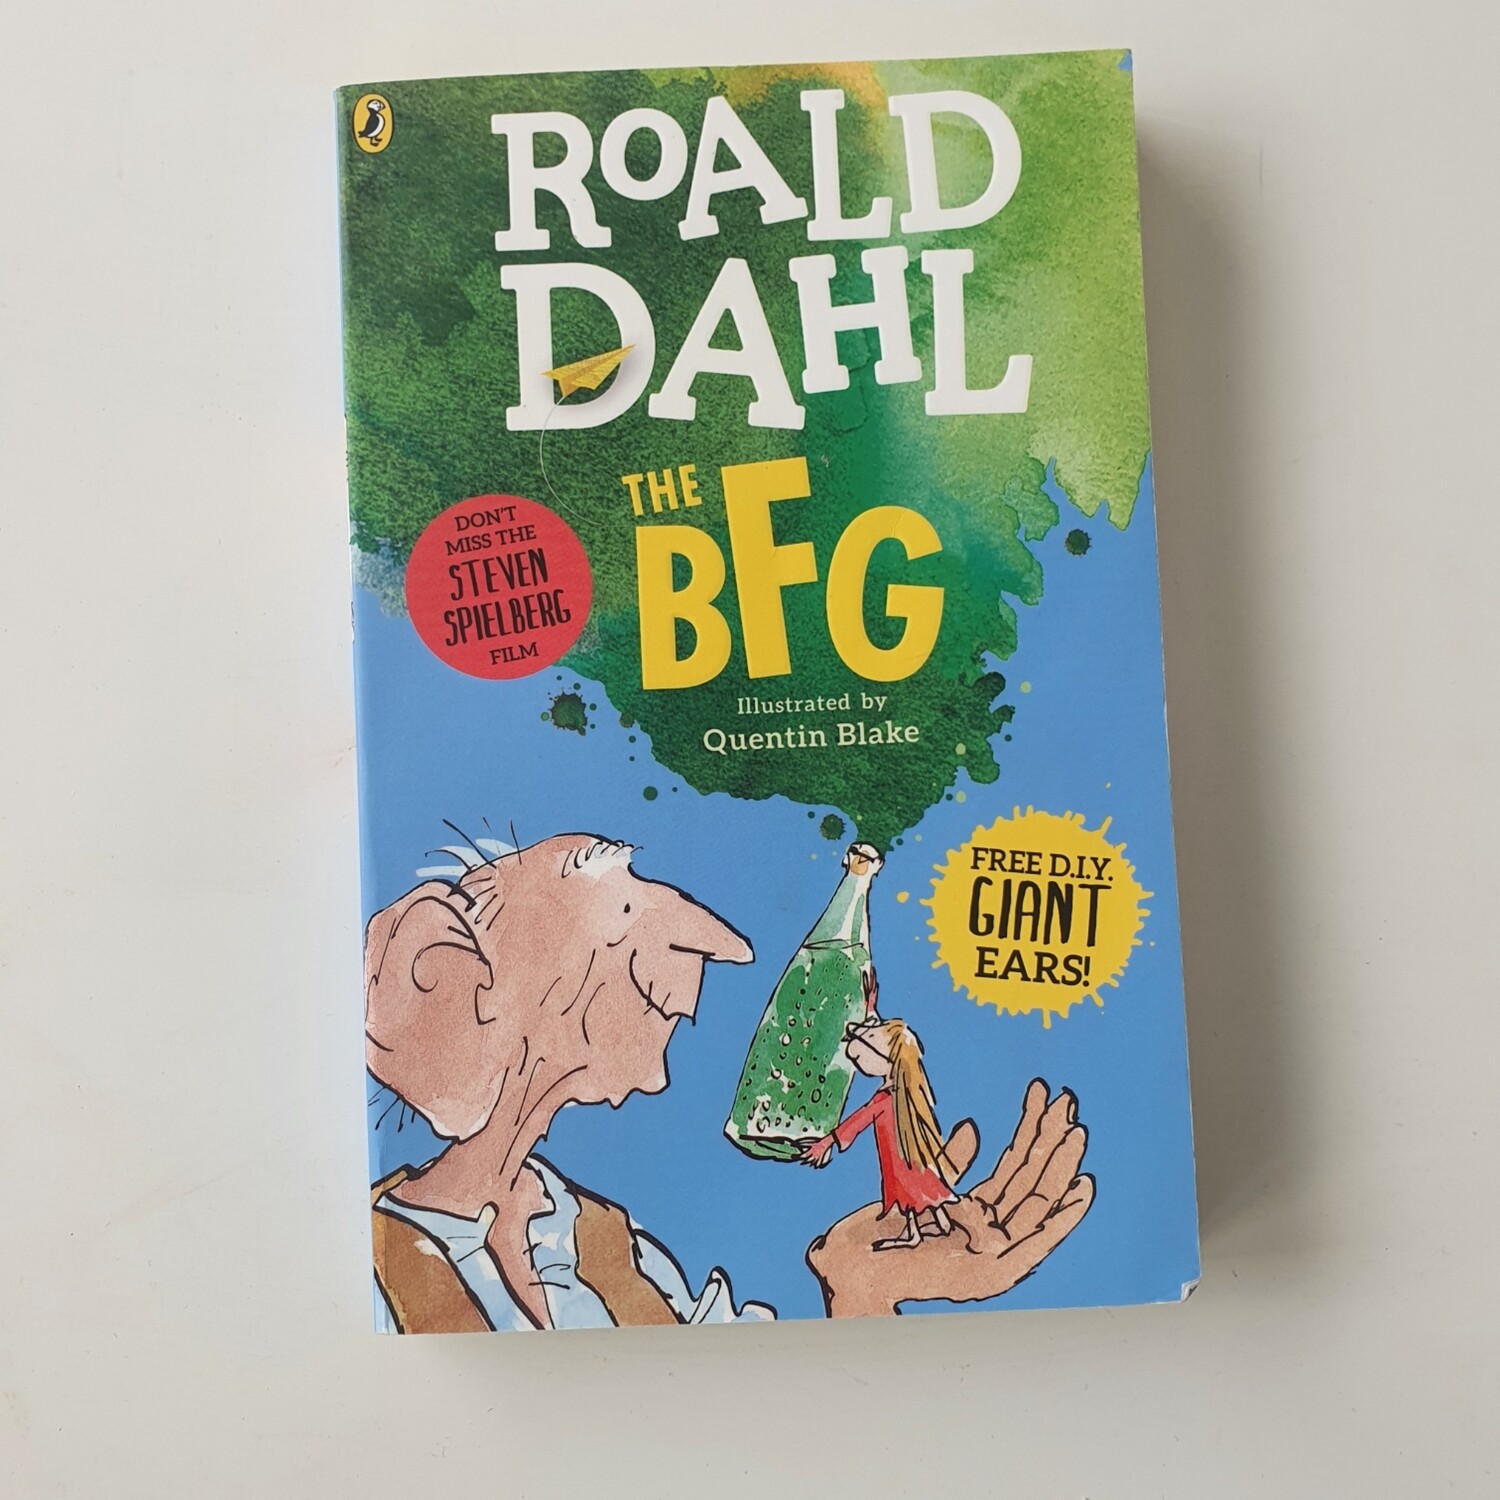 Roald Dahl BFG Notebook - made from a paperback book